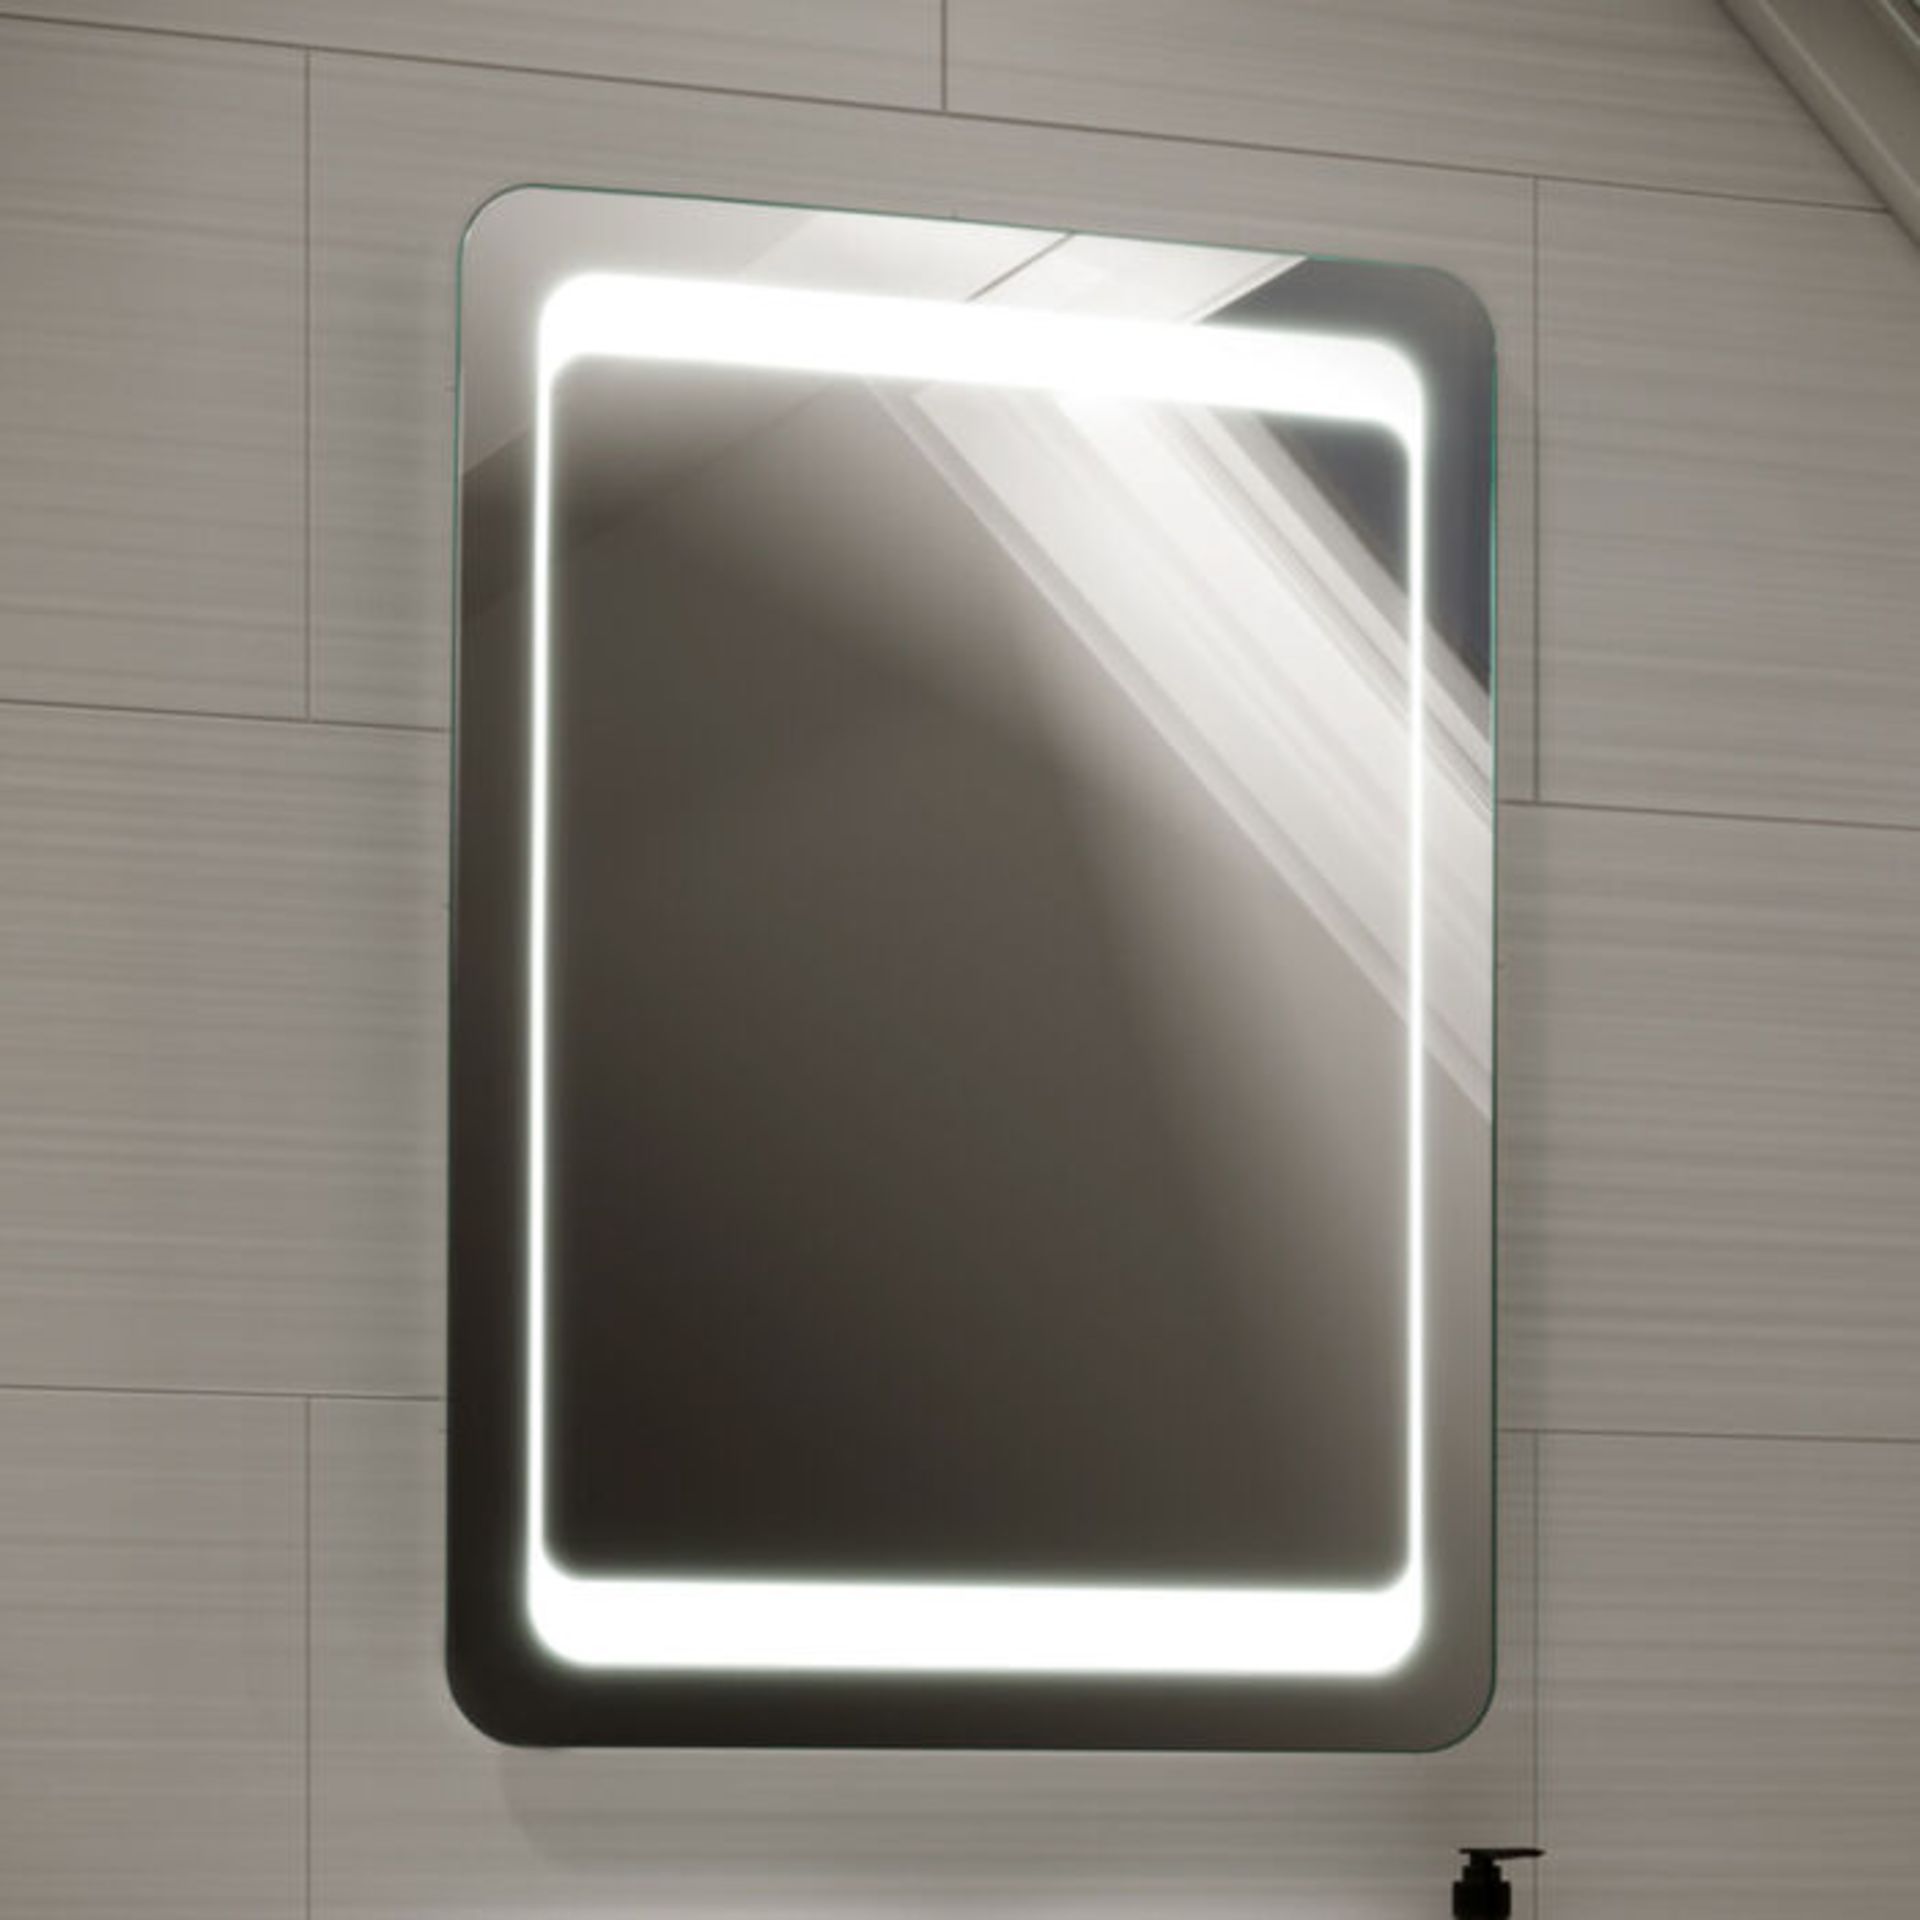 (AA106) 500x700mm Quasar Illuminated LED Mirror. RRP £349.99. Energy efficient LED lighting wi... - Image 2 of 4